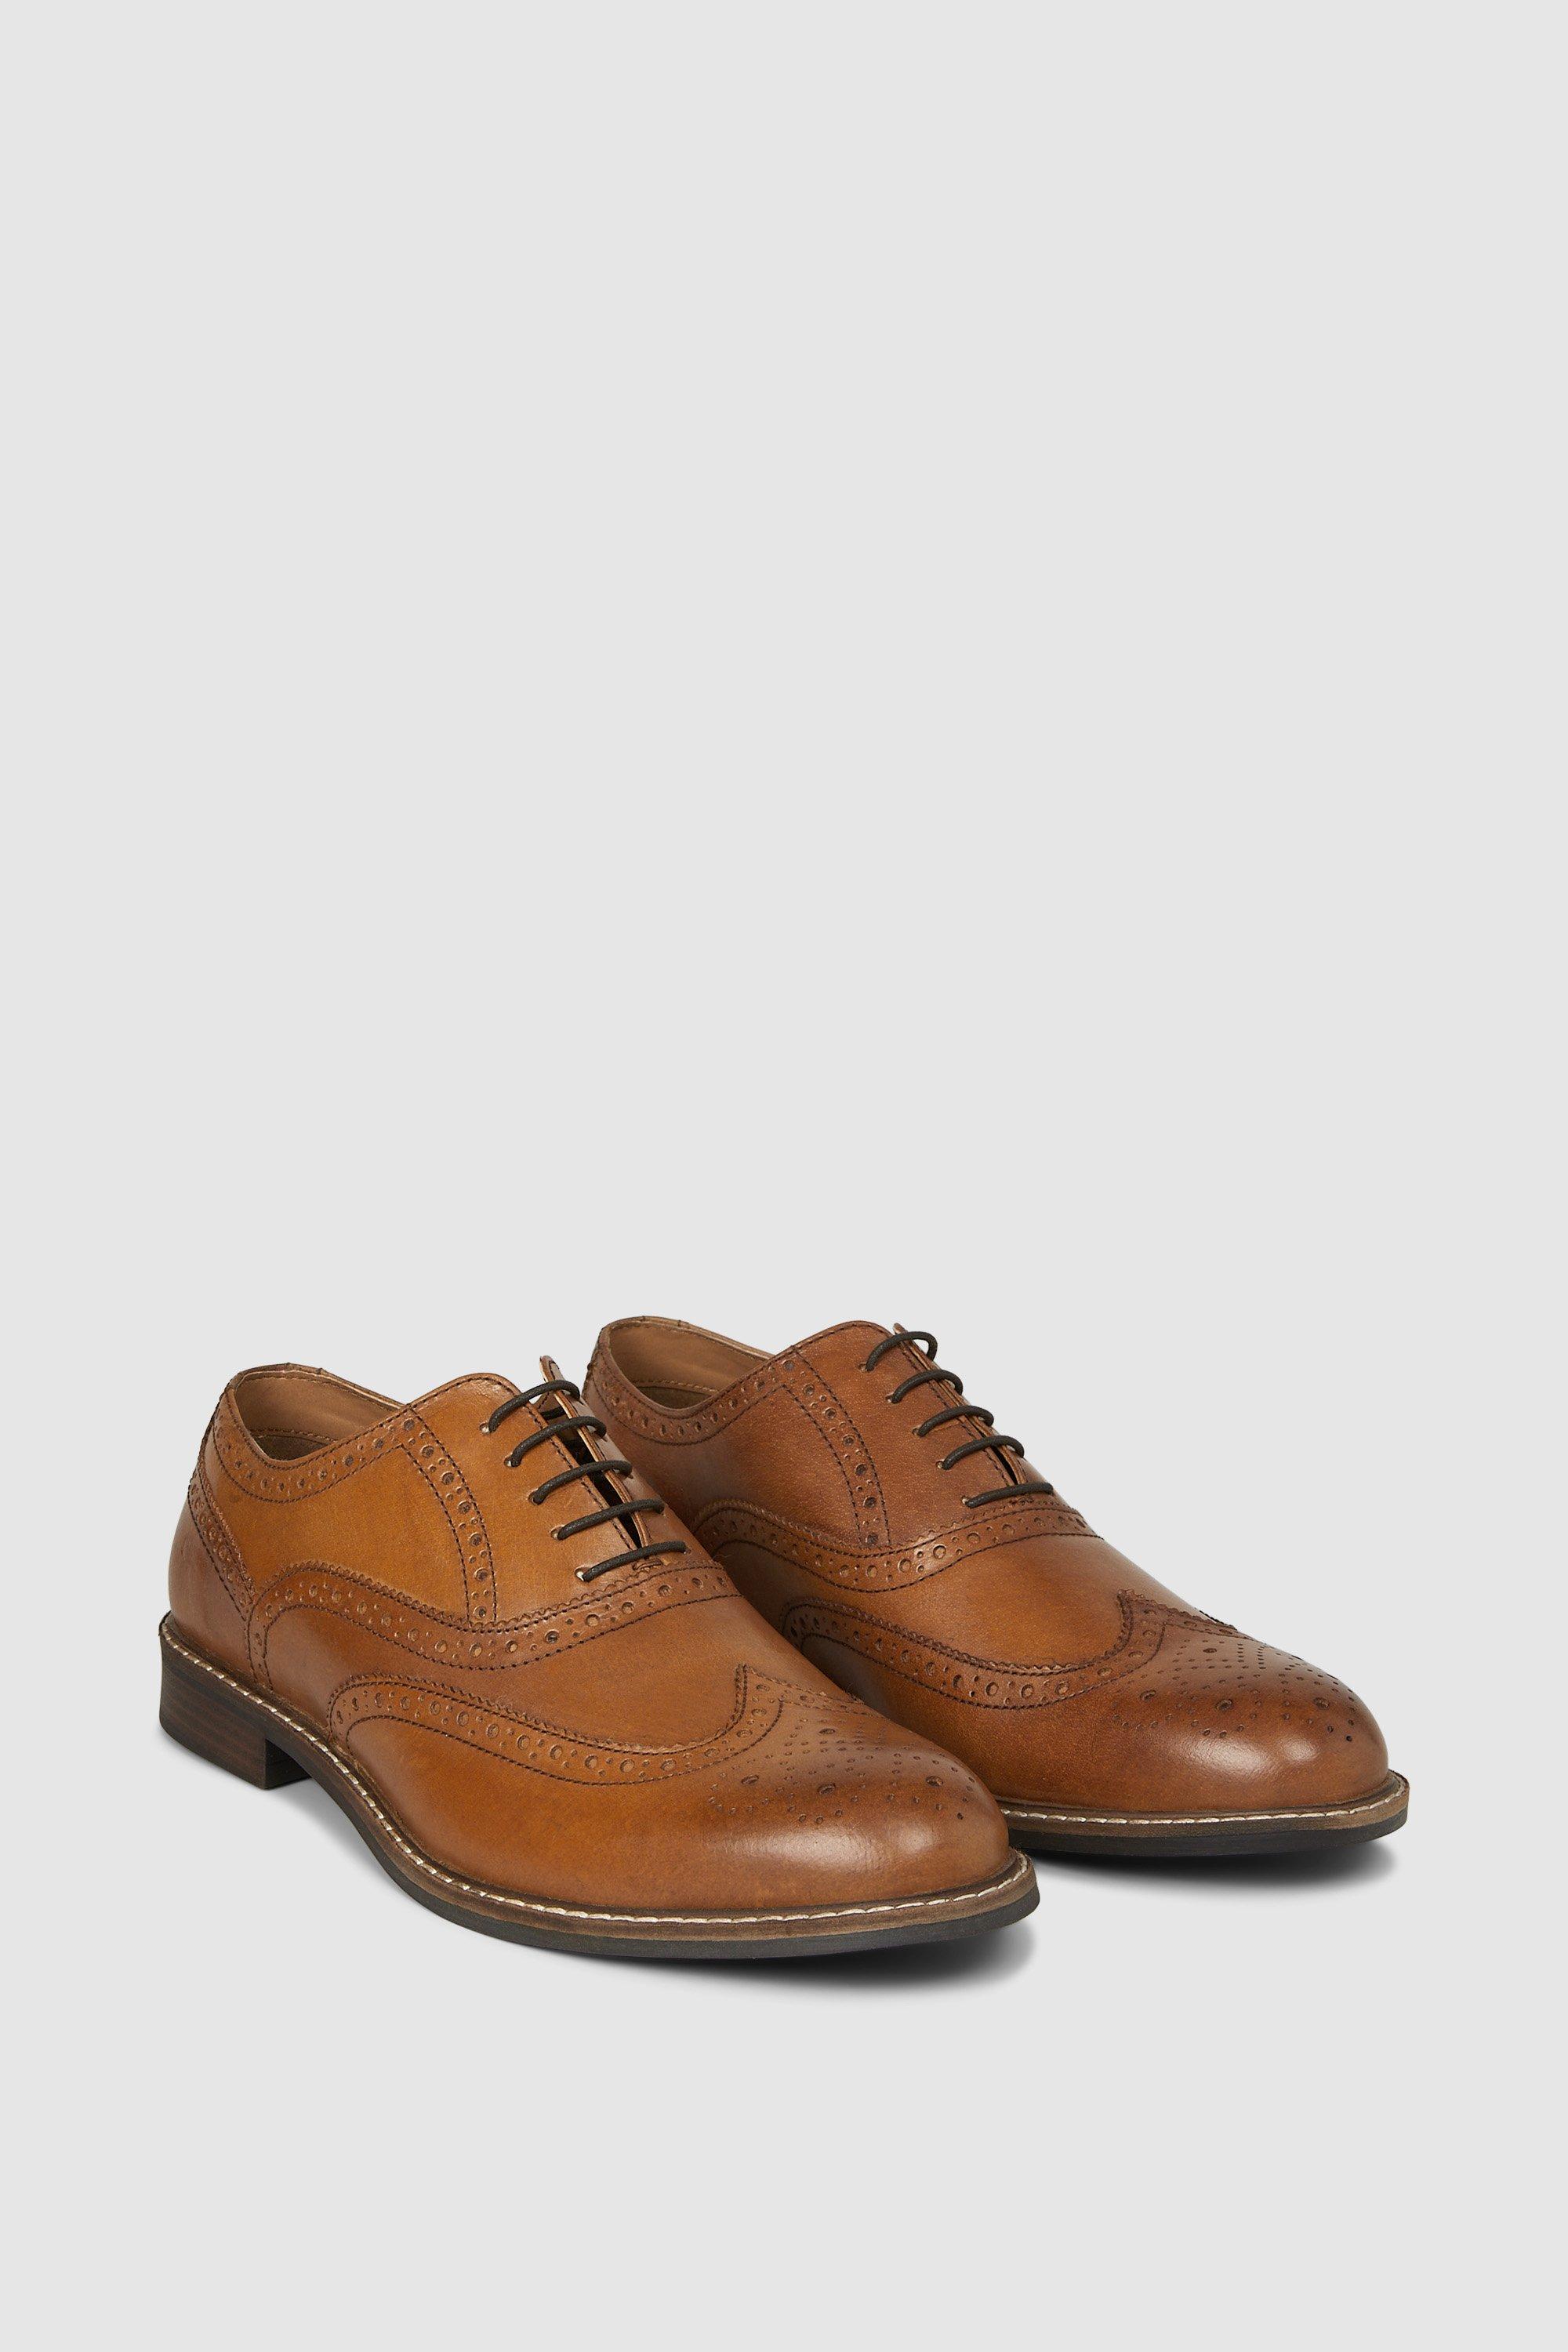 Red Tape Gala Tan Men's Leather Brogue Shoes UK 7-12 RRP £50 Free UK P&P! 